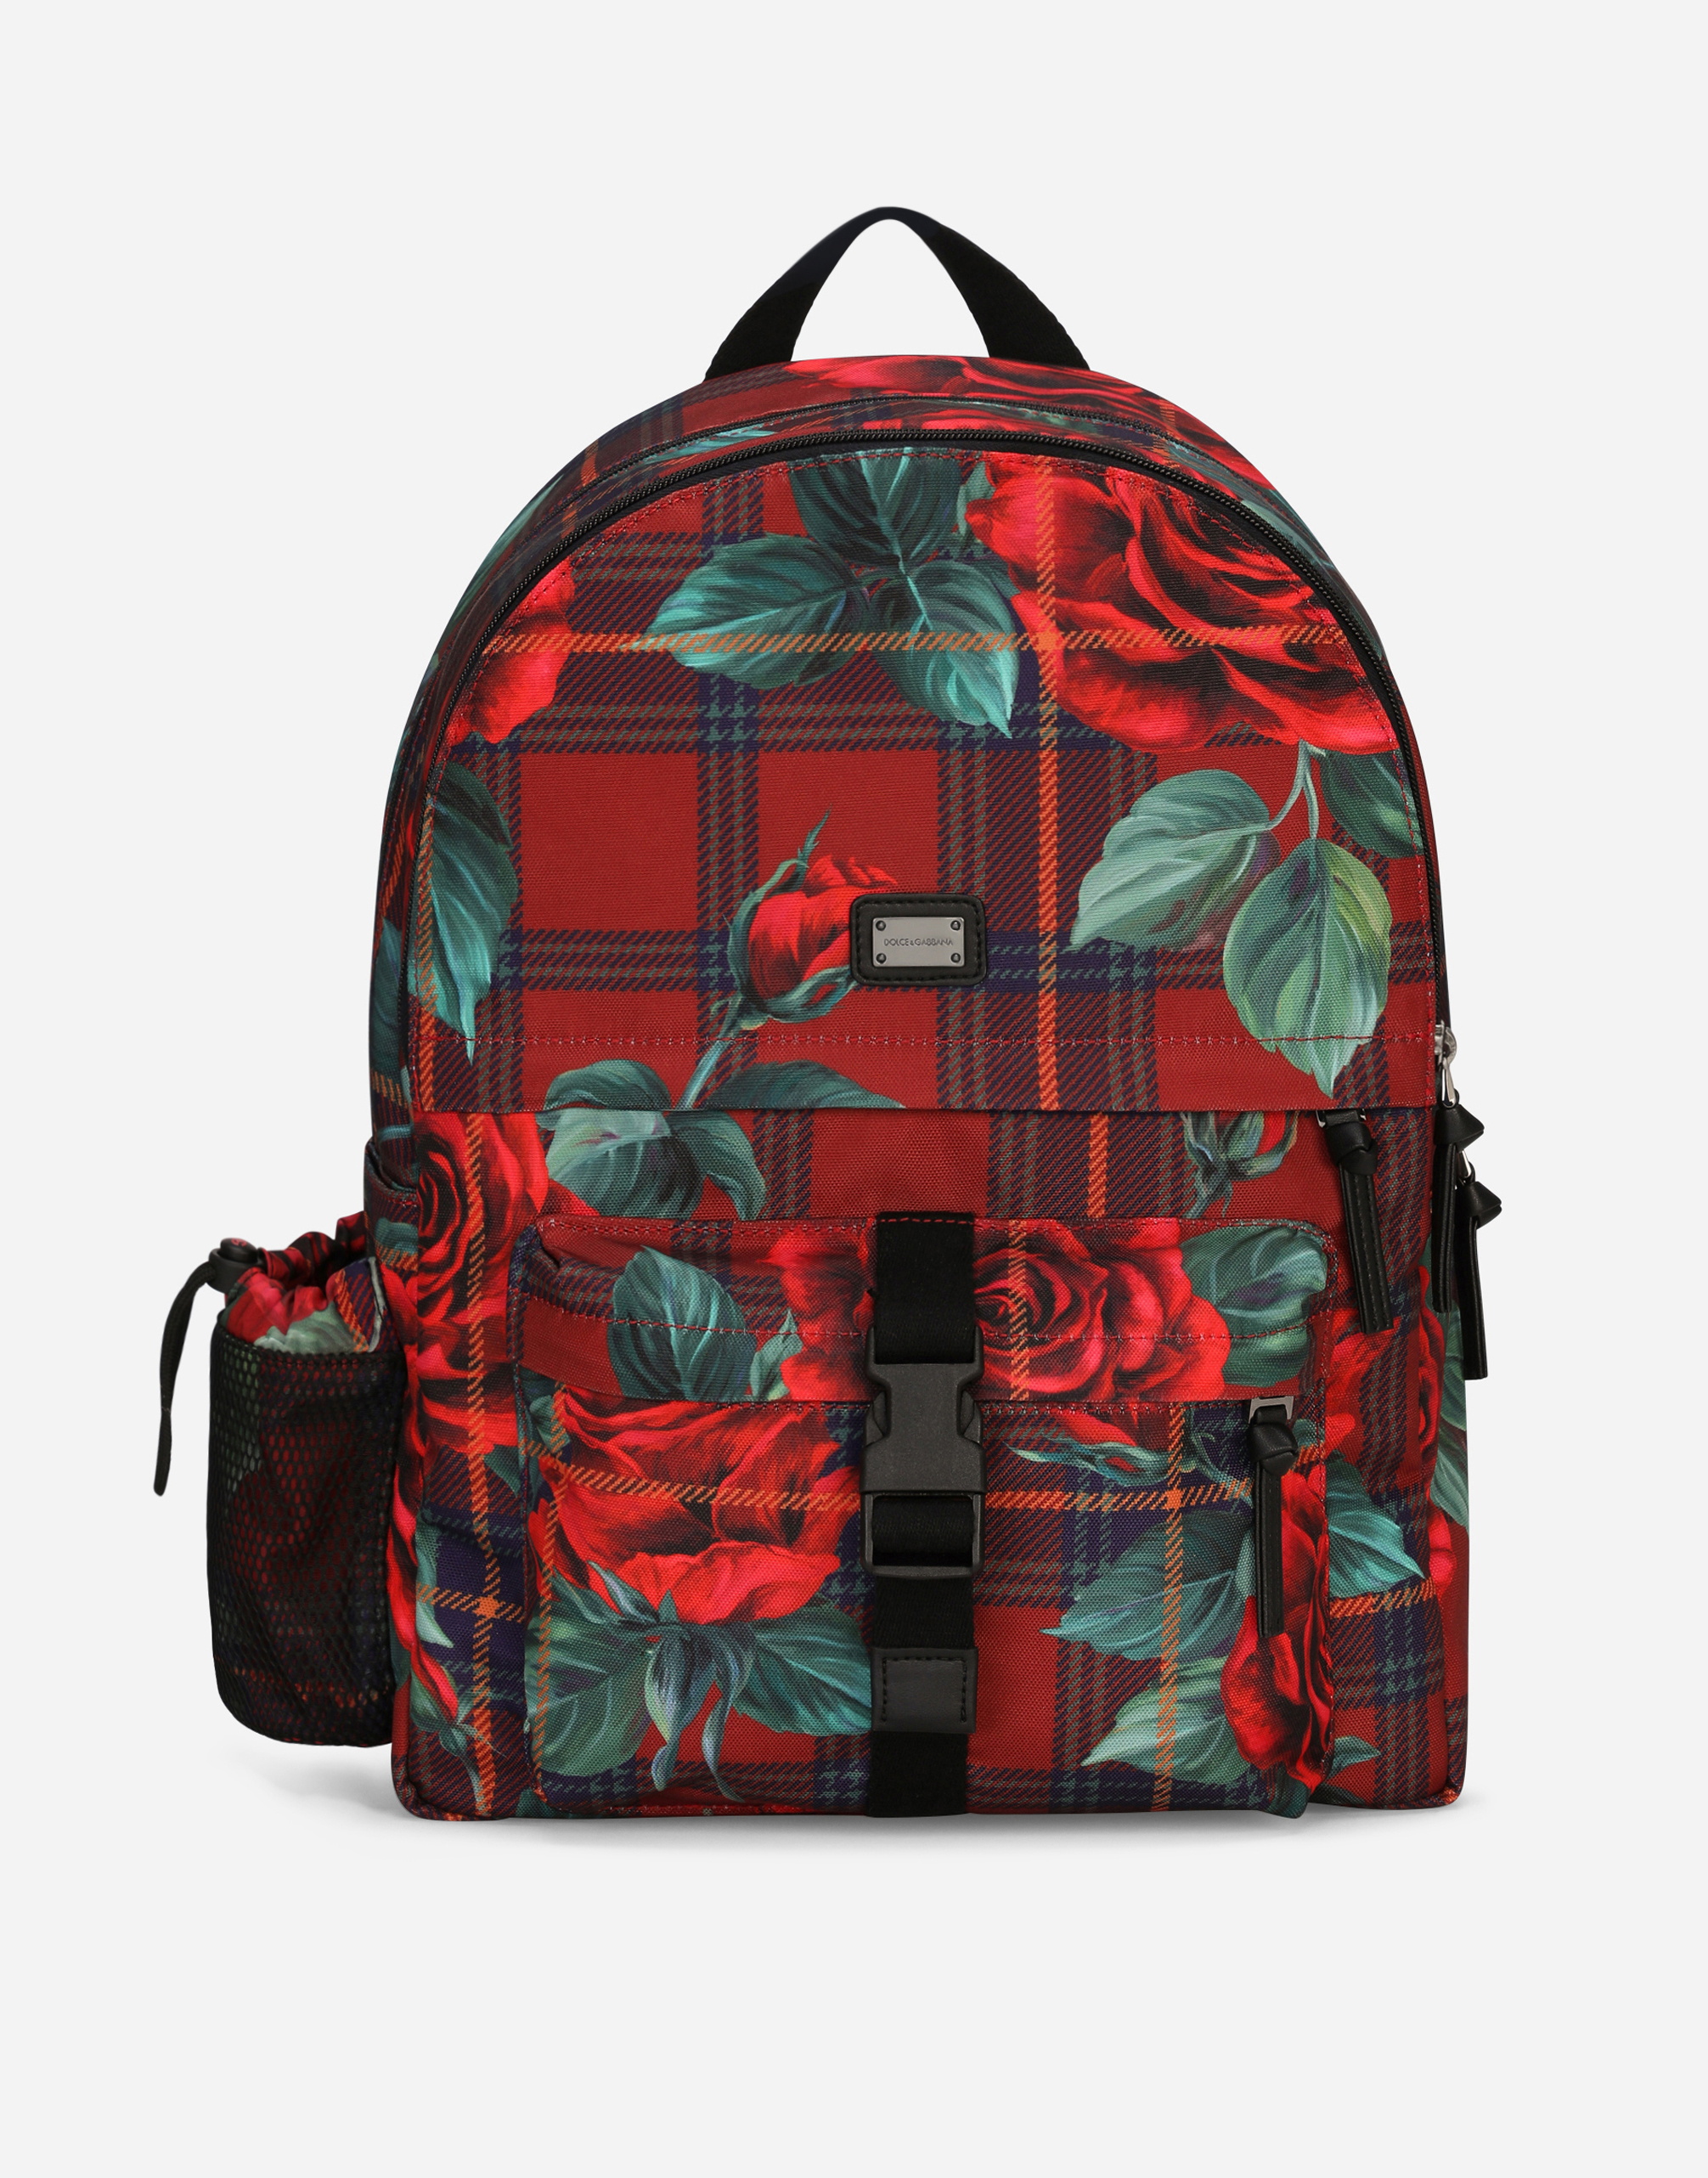 Dolce & Gabbana Printed Nylon Backpack In Red